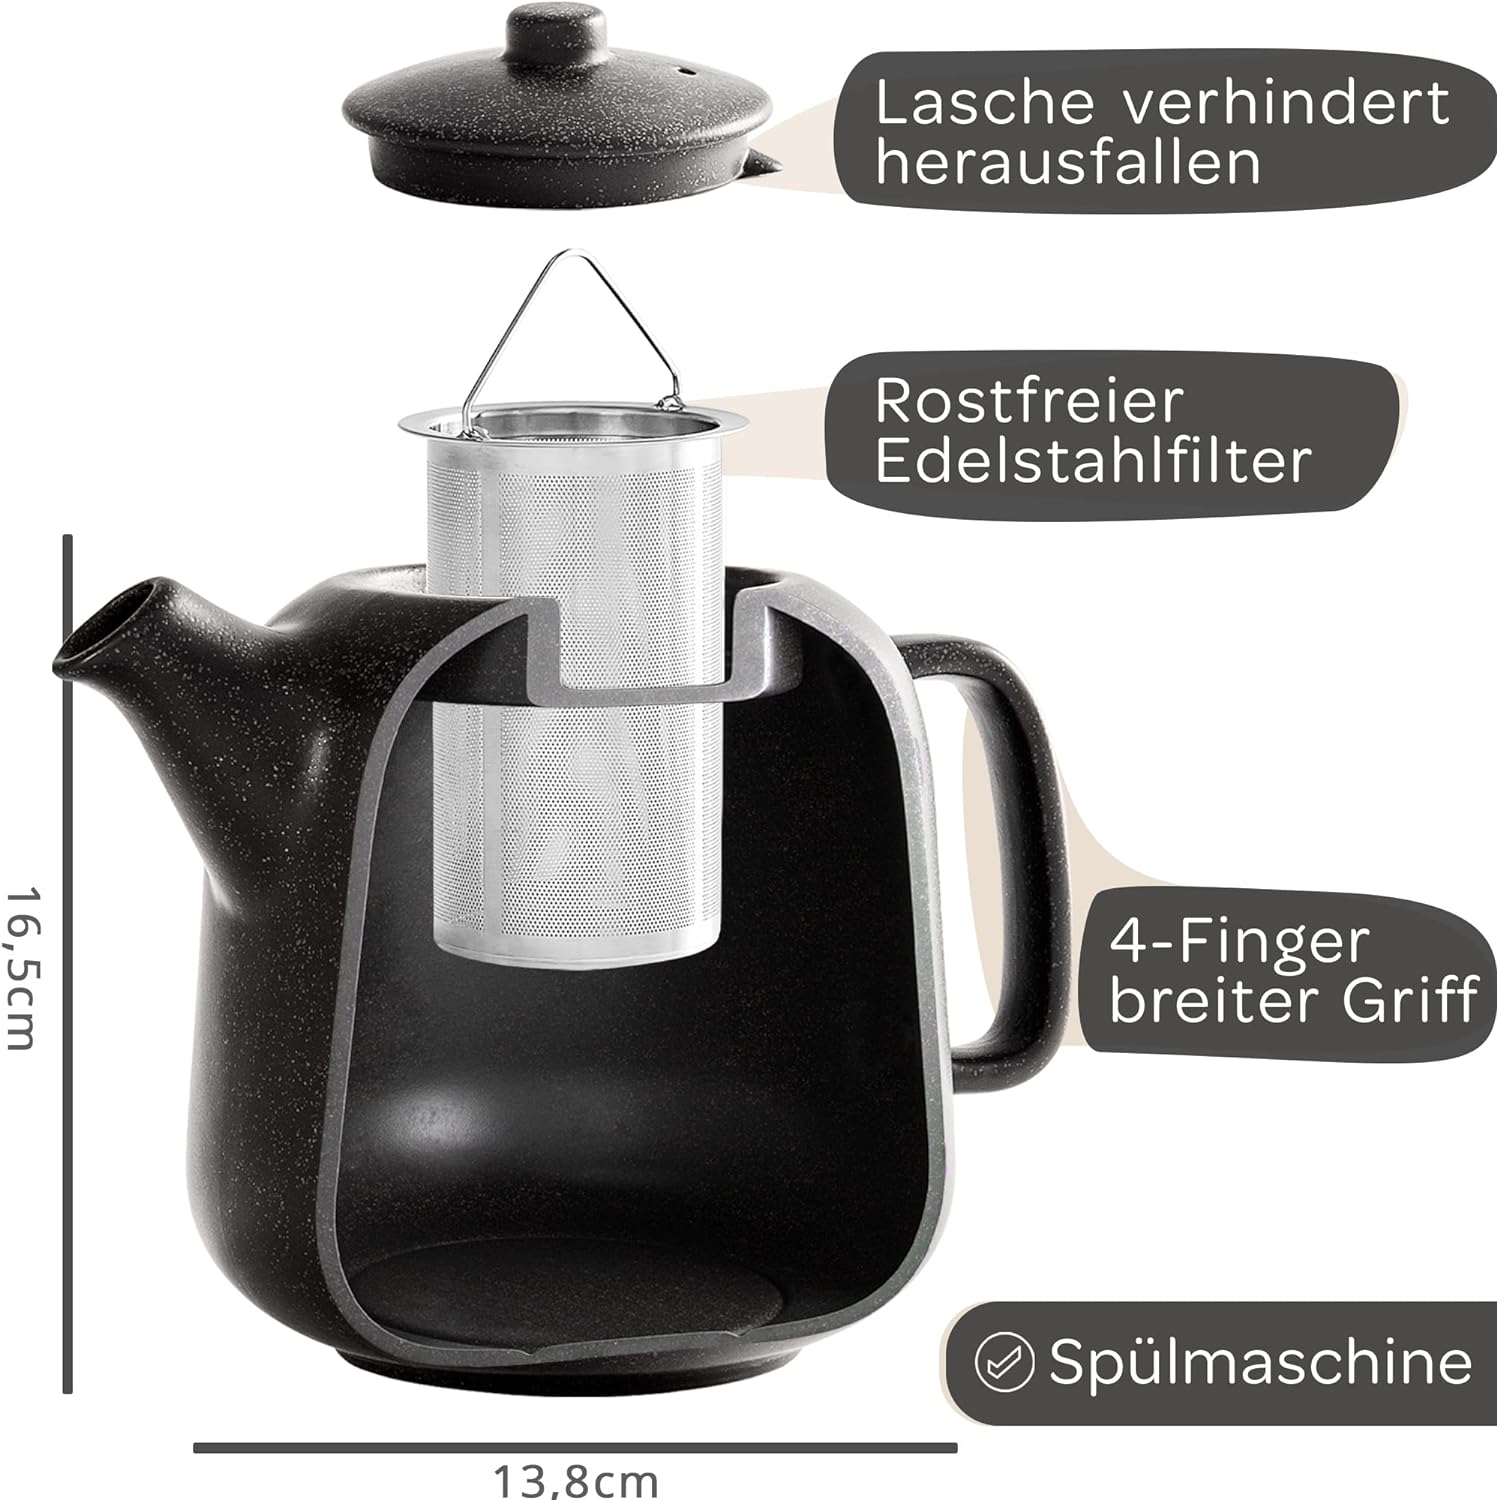 Steinzeit Designer Teapot (1.3 L) - Teapot with Strainer Insert Made of 304 Stainless Steel - Ceramic Teapot with Unique Glaze - Removable Teapot with Strainer - Teapot Black